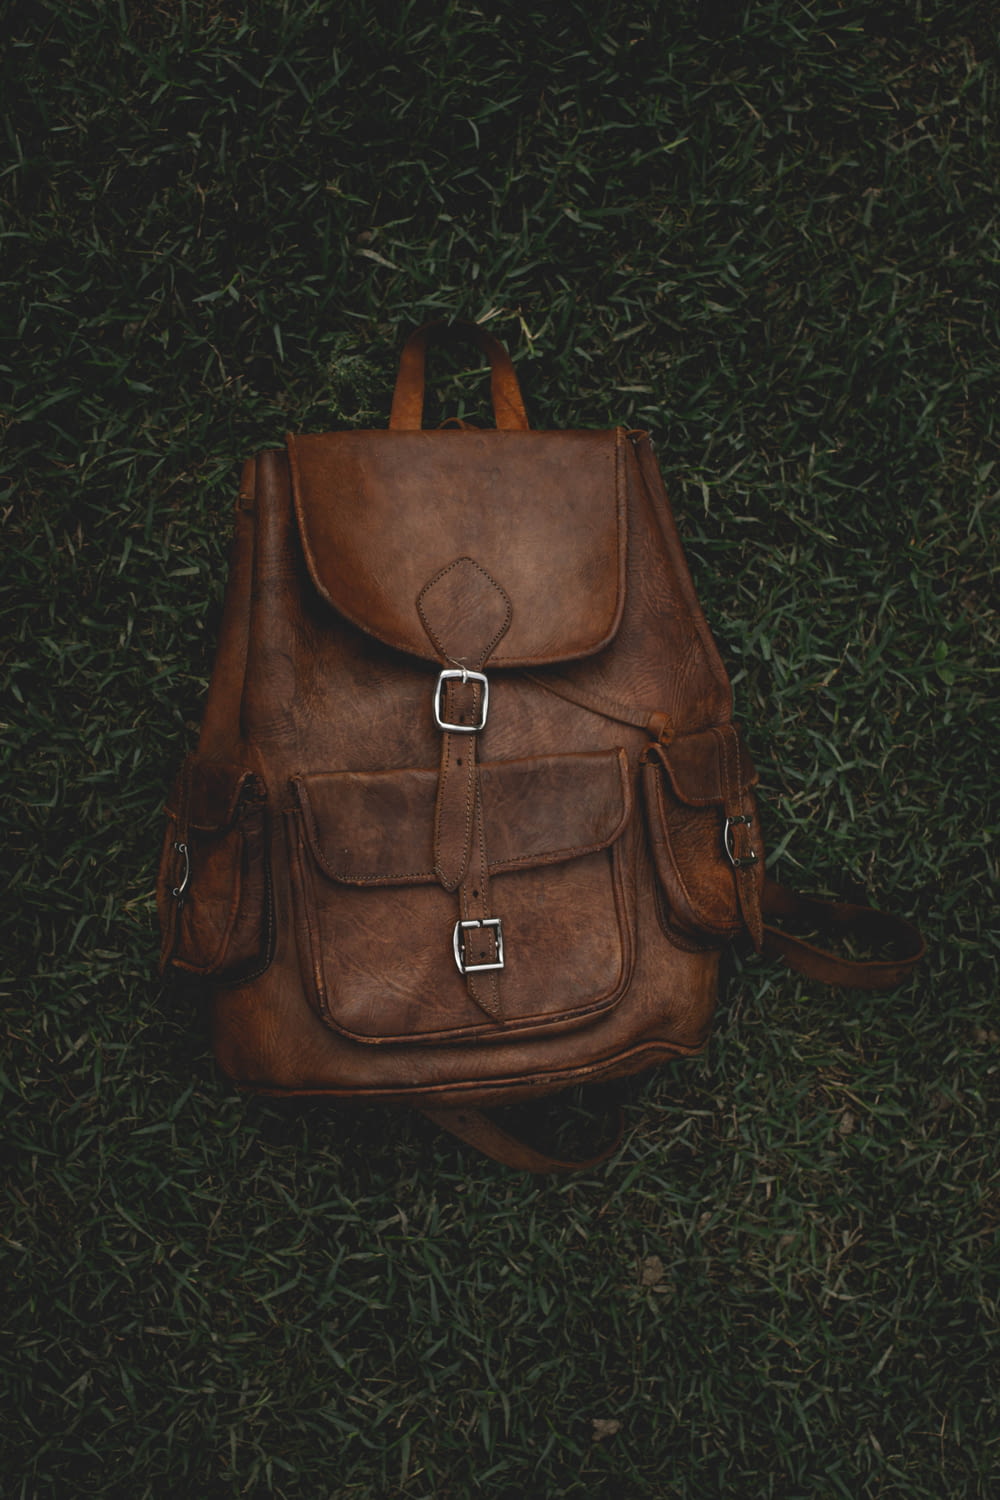 brown leather handbag on green textile